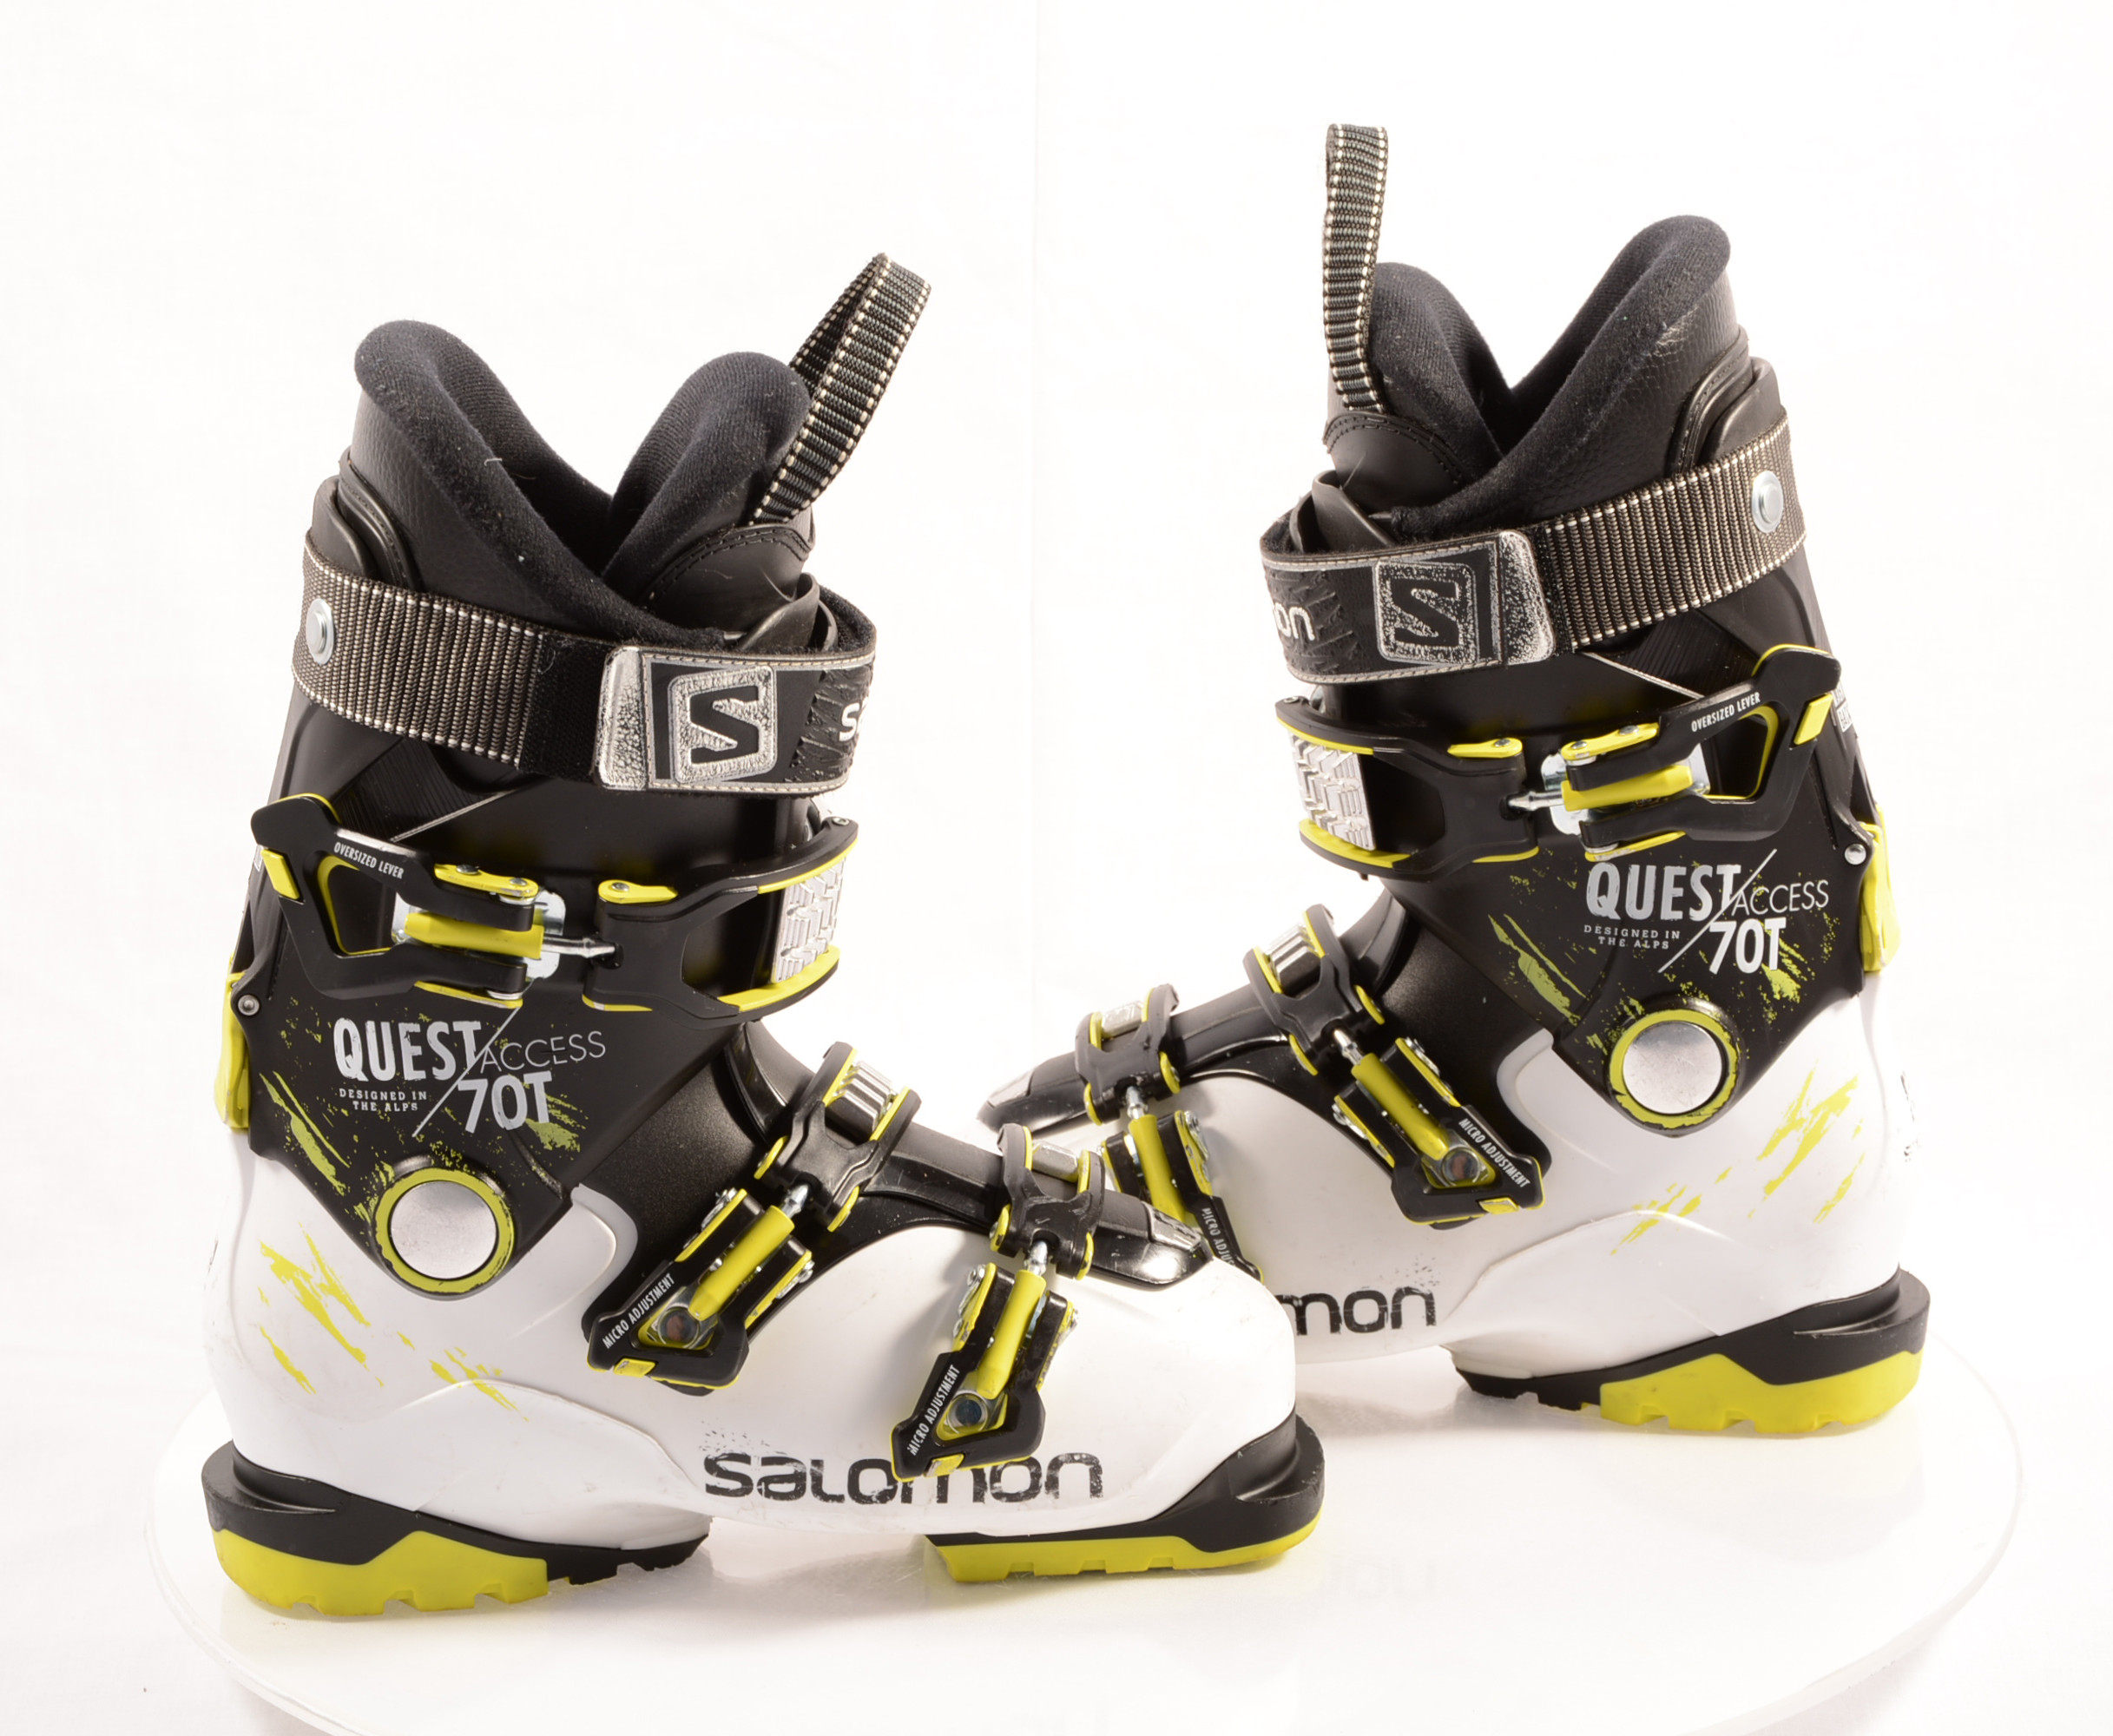 Of impuls band ski boots SALOMON QUEST ACCESS 70 T, OVERSIZED lever, MAGNESIUM backbone,  SKI/WALK, micro, macro ( TOP condition ) - Mardosport.co.uk